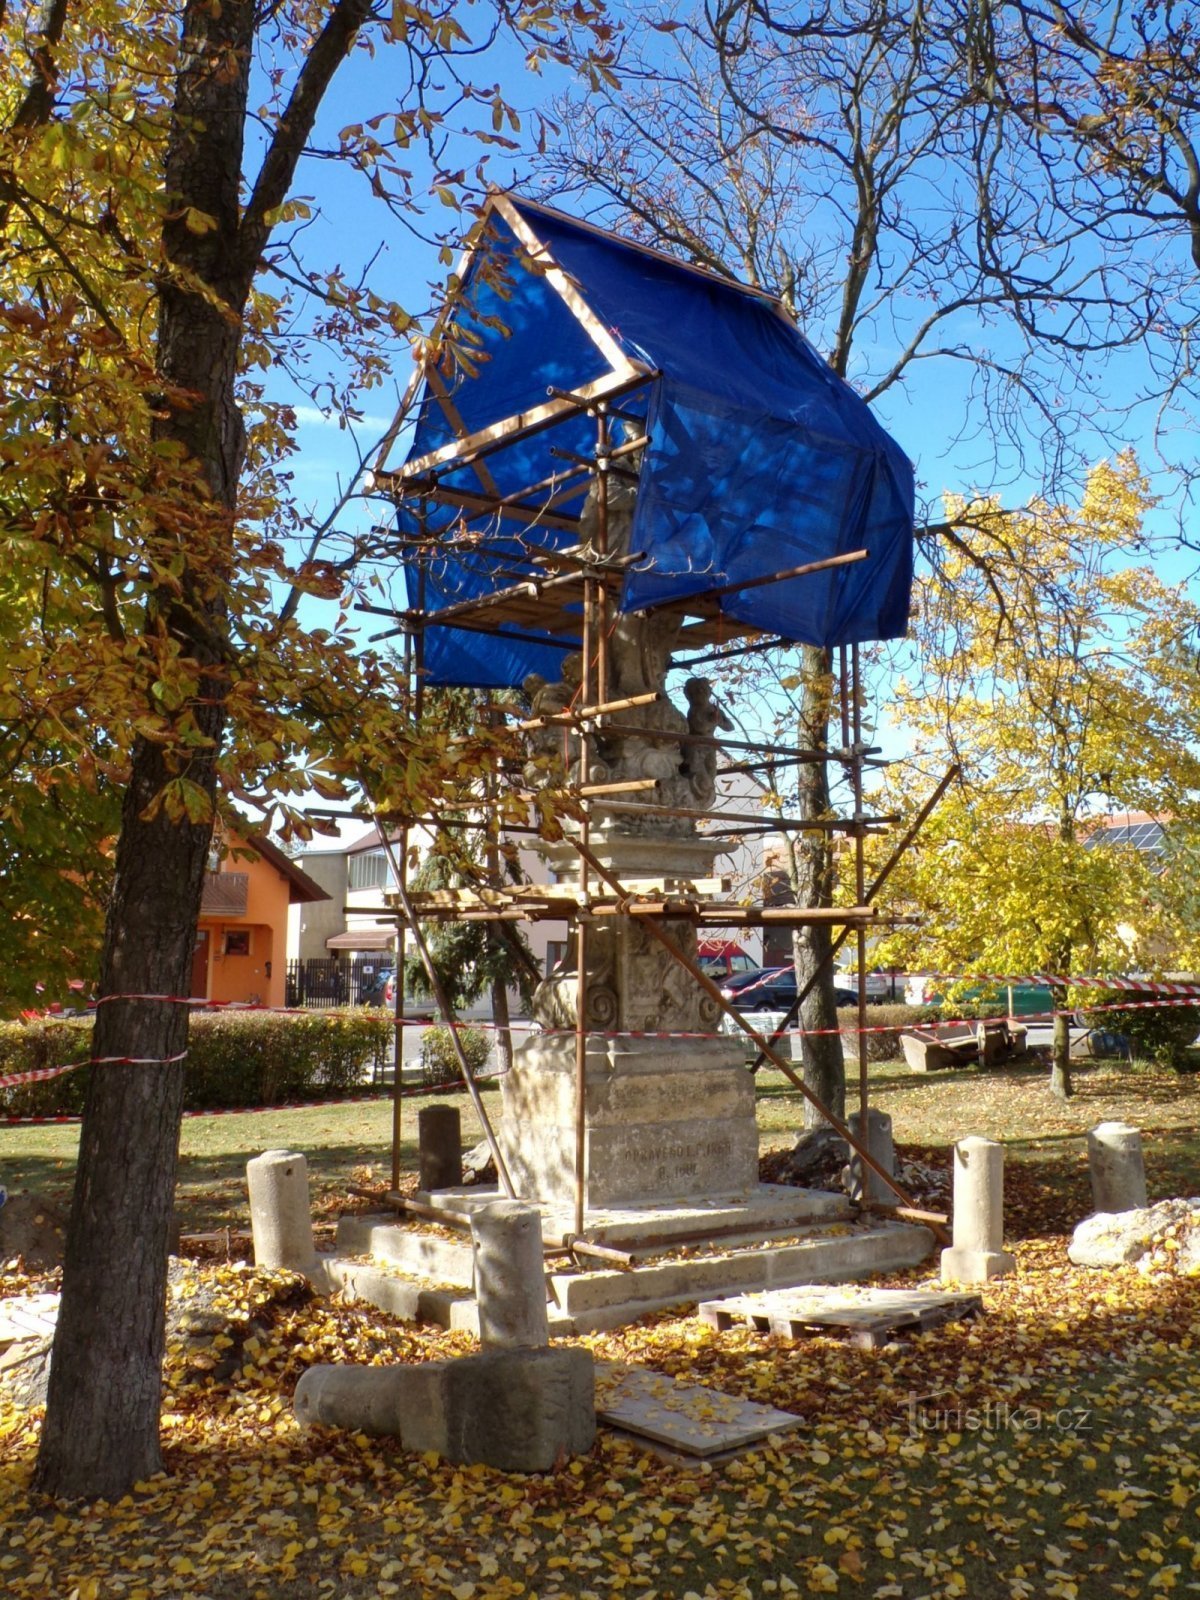 Popravilo kipa sv. Janeza Nepomuškega (Sezemice, 20.10.2021. XNUMX. XNUMX)